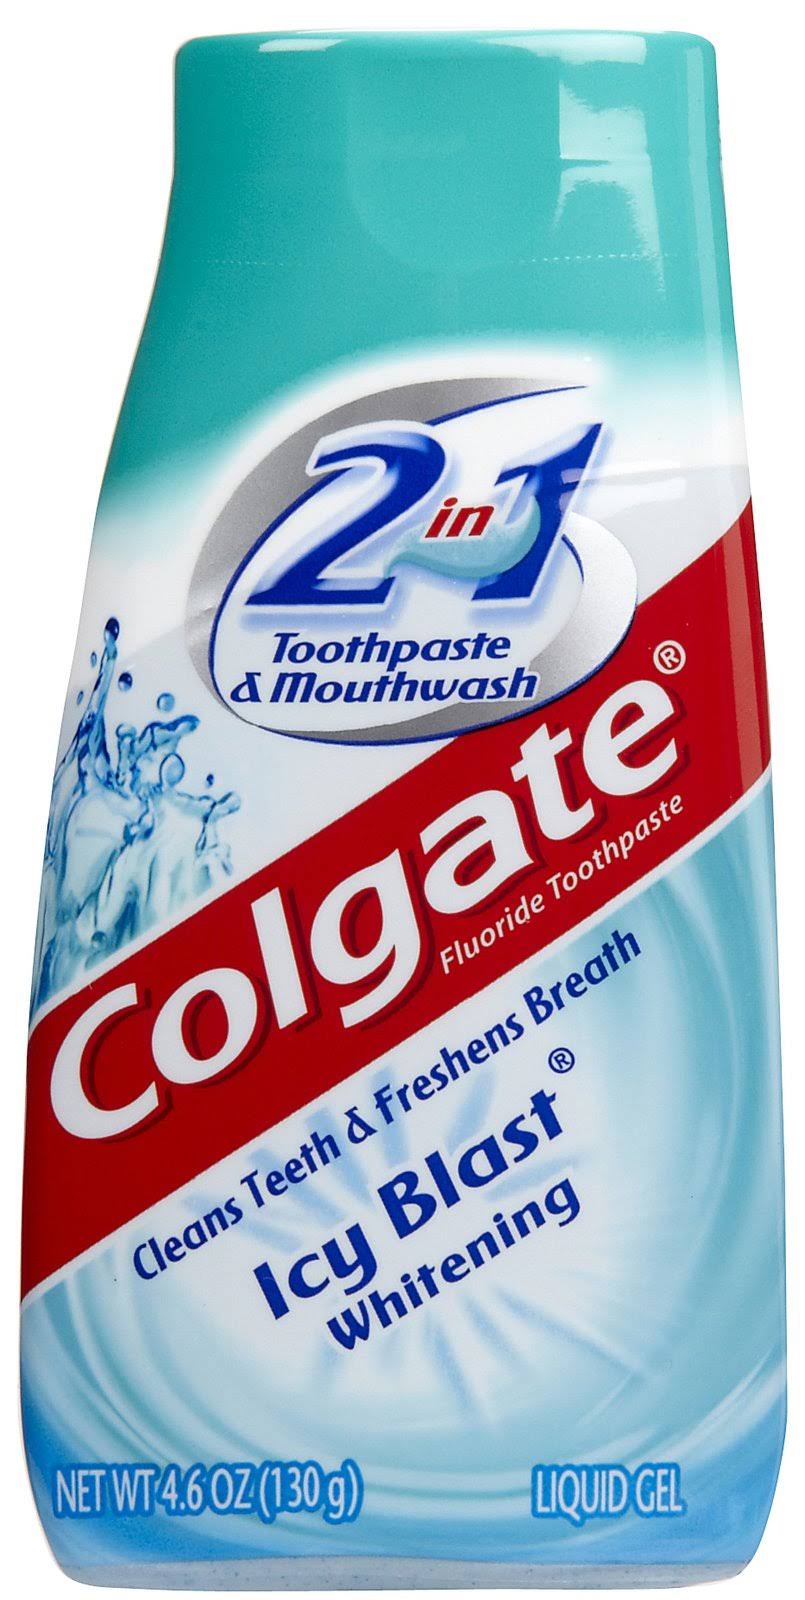 Colgate 2 in 1 Toothpaste and Mouthwash Liquid Gel Fluoride Toothpaste - 4.6oz, Icy Blast